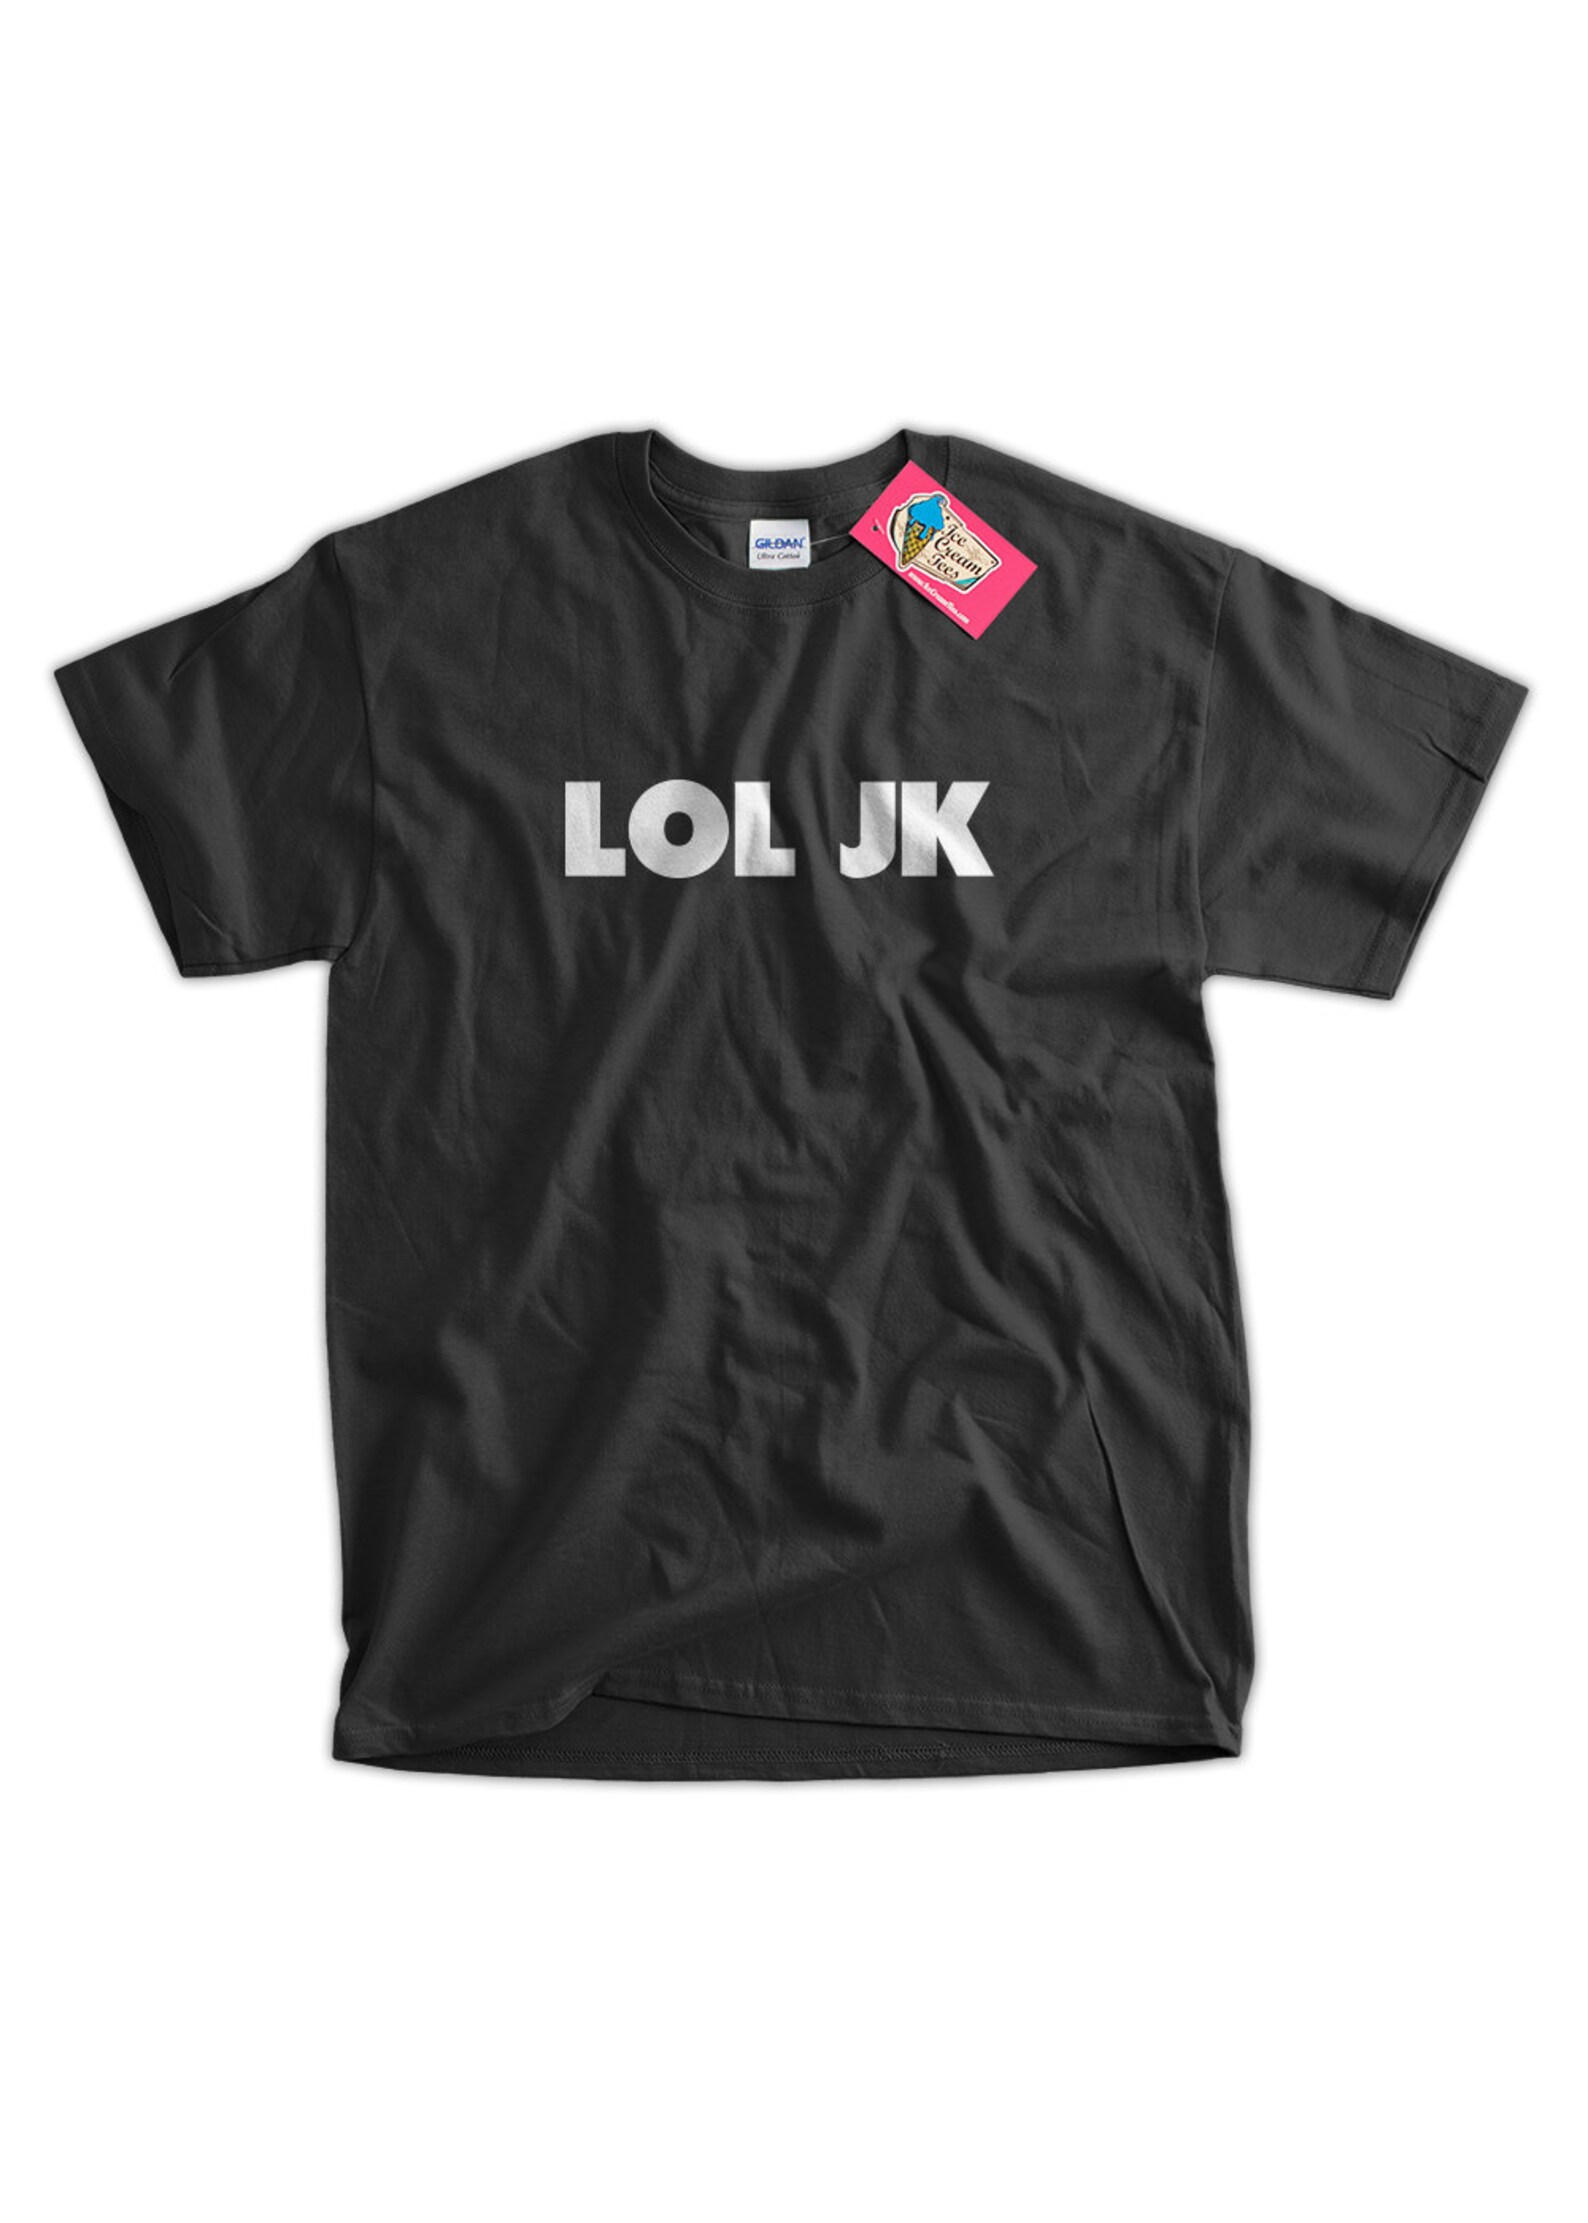 LOL JK Funny Text Blog Internet Speech Tshirt T-Shirt Tee | Etsy